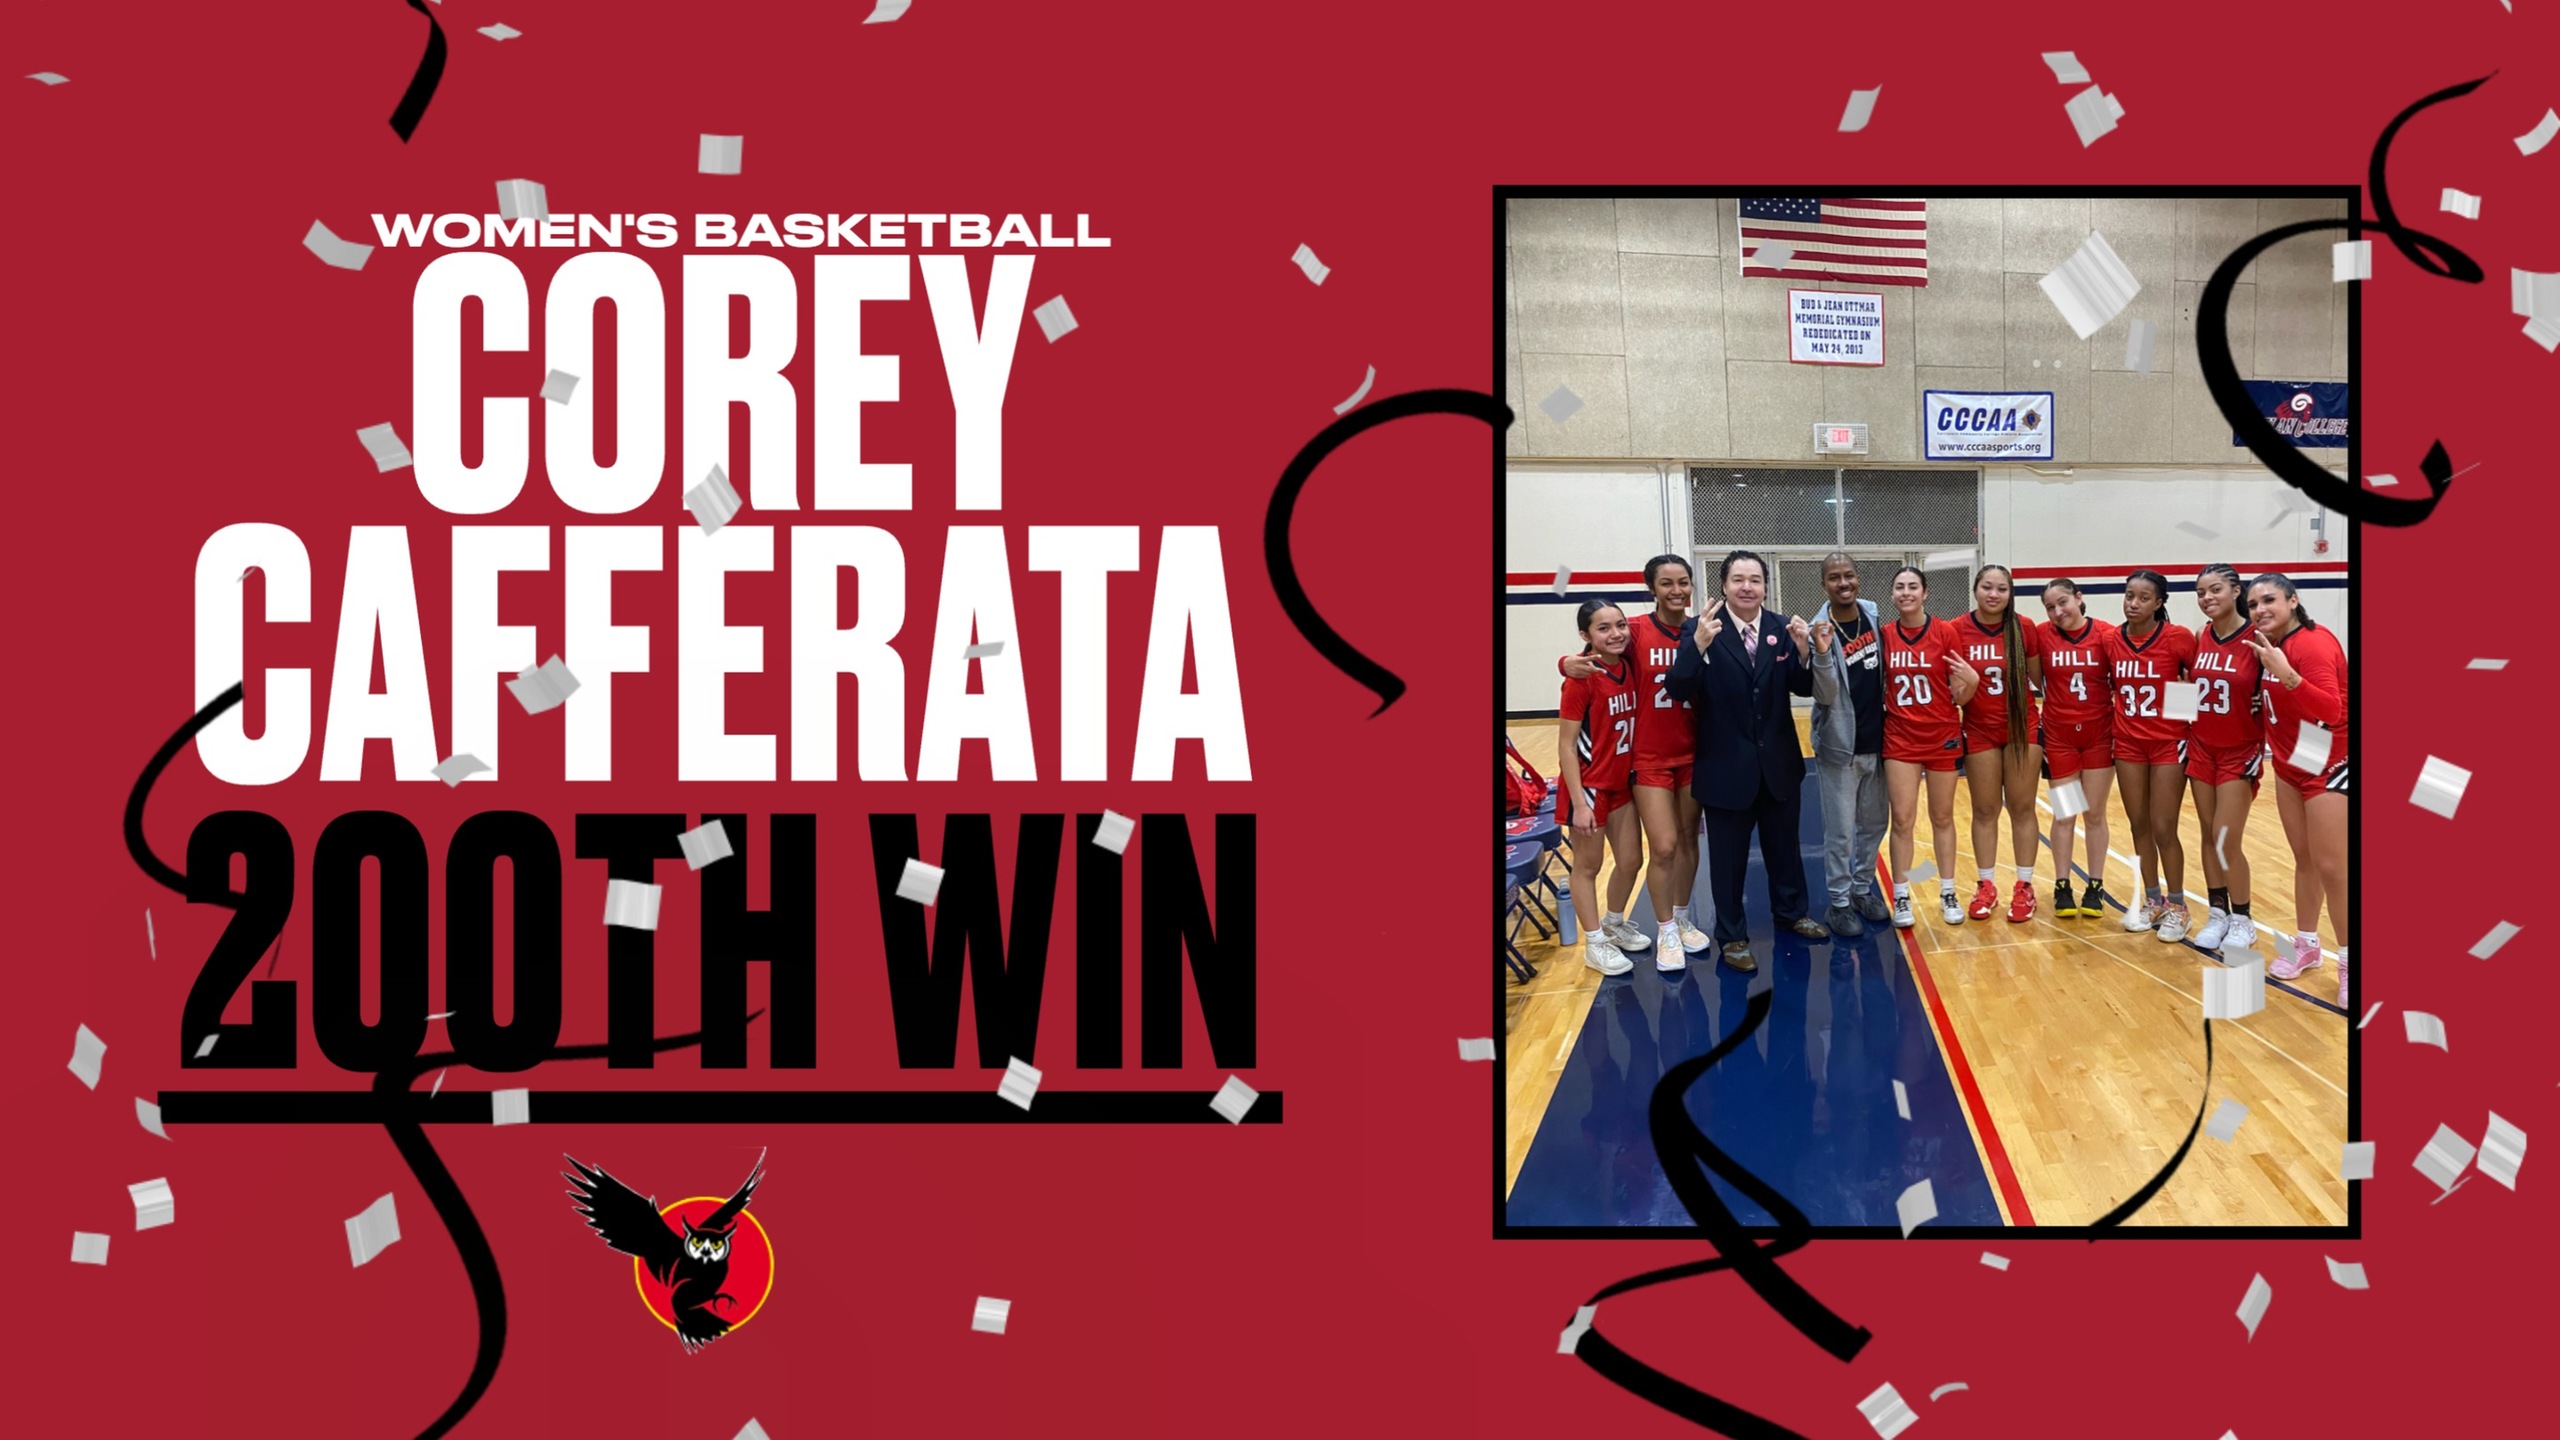 Corey Cafferata Win's 200th Career Game